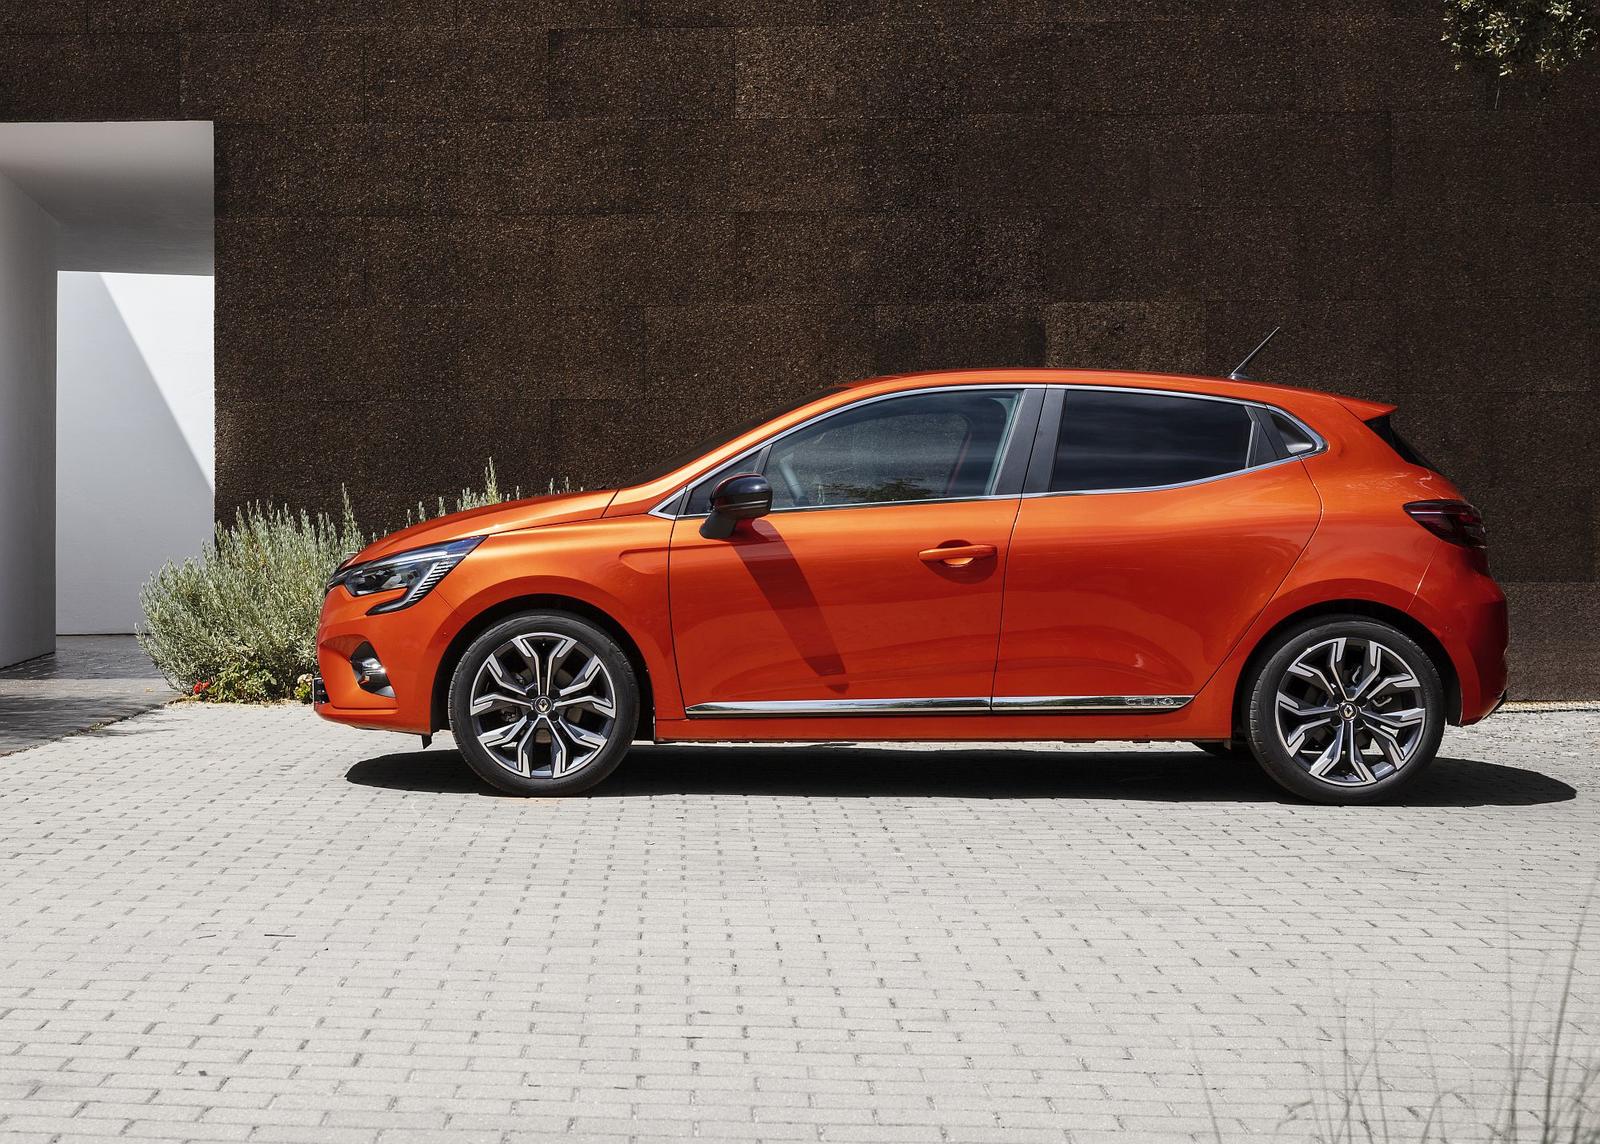 All-new Renault Clio Intens – Orange Valencia (19)